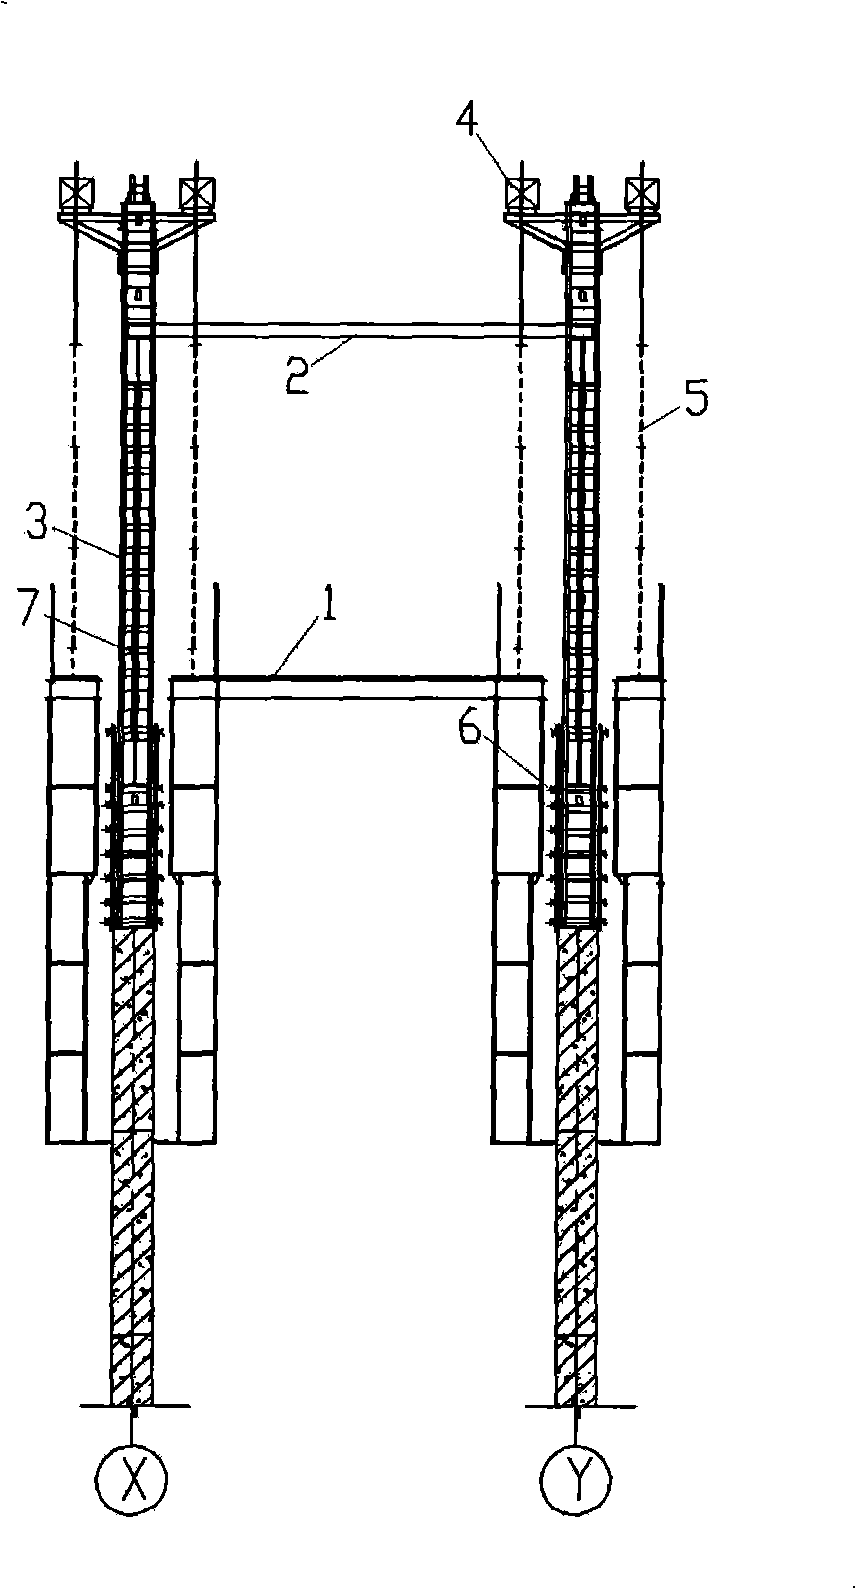 Construction method for integrally hoisting steel platform and integrally traversing girders layer